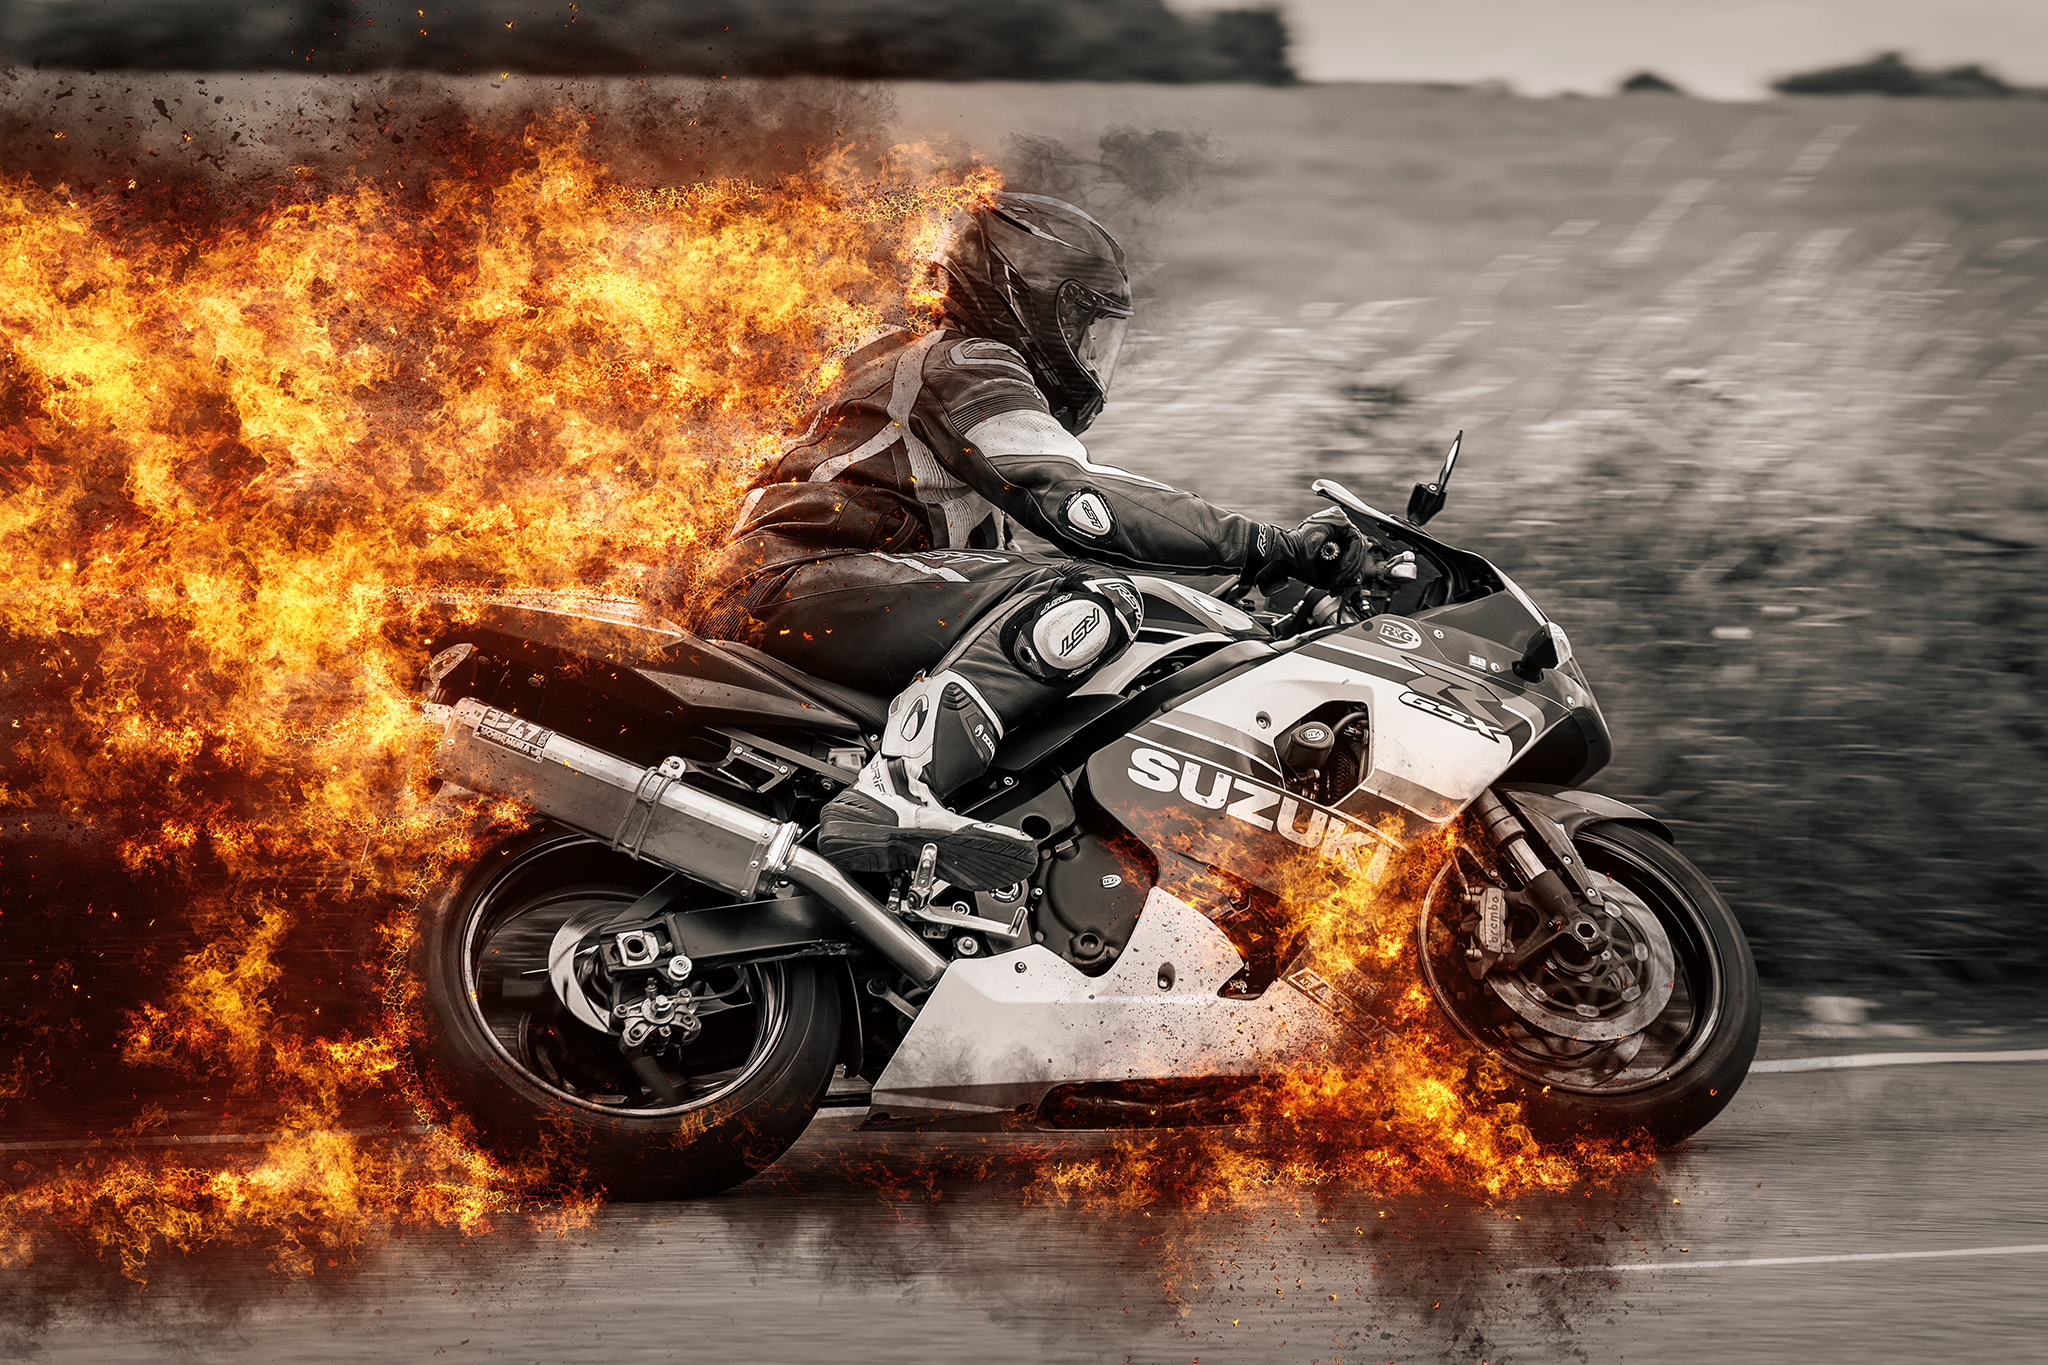 bike with firestorm edit